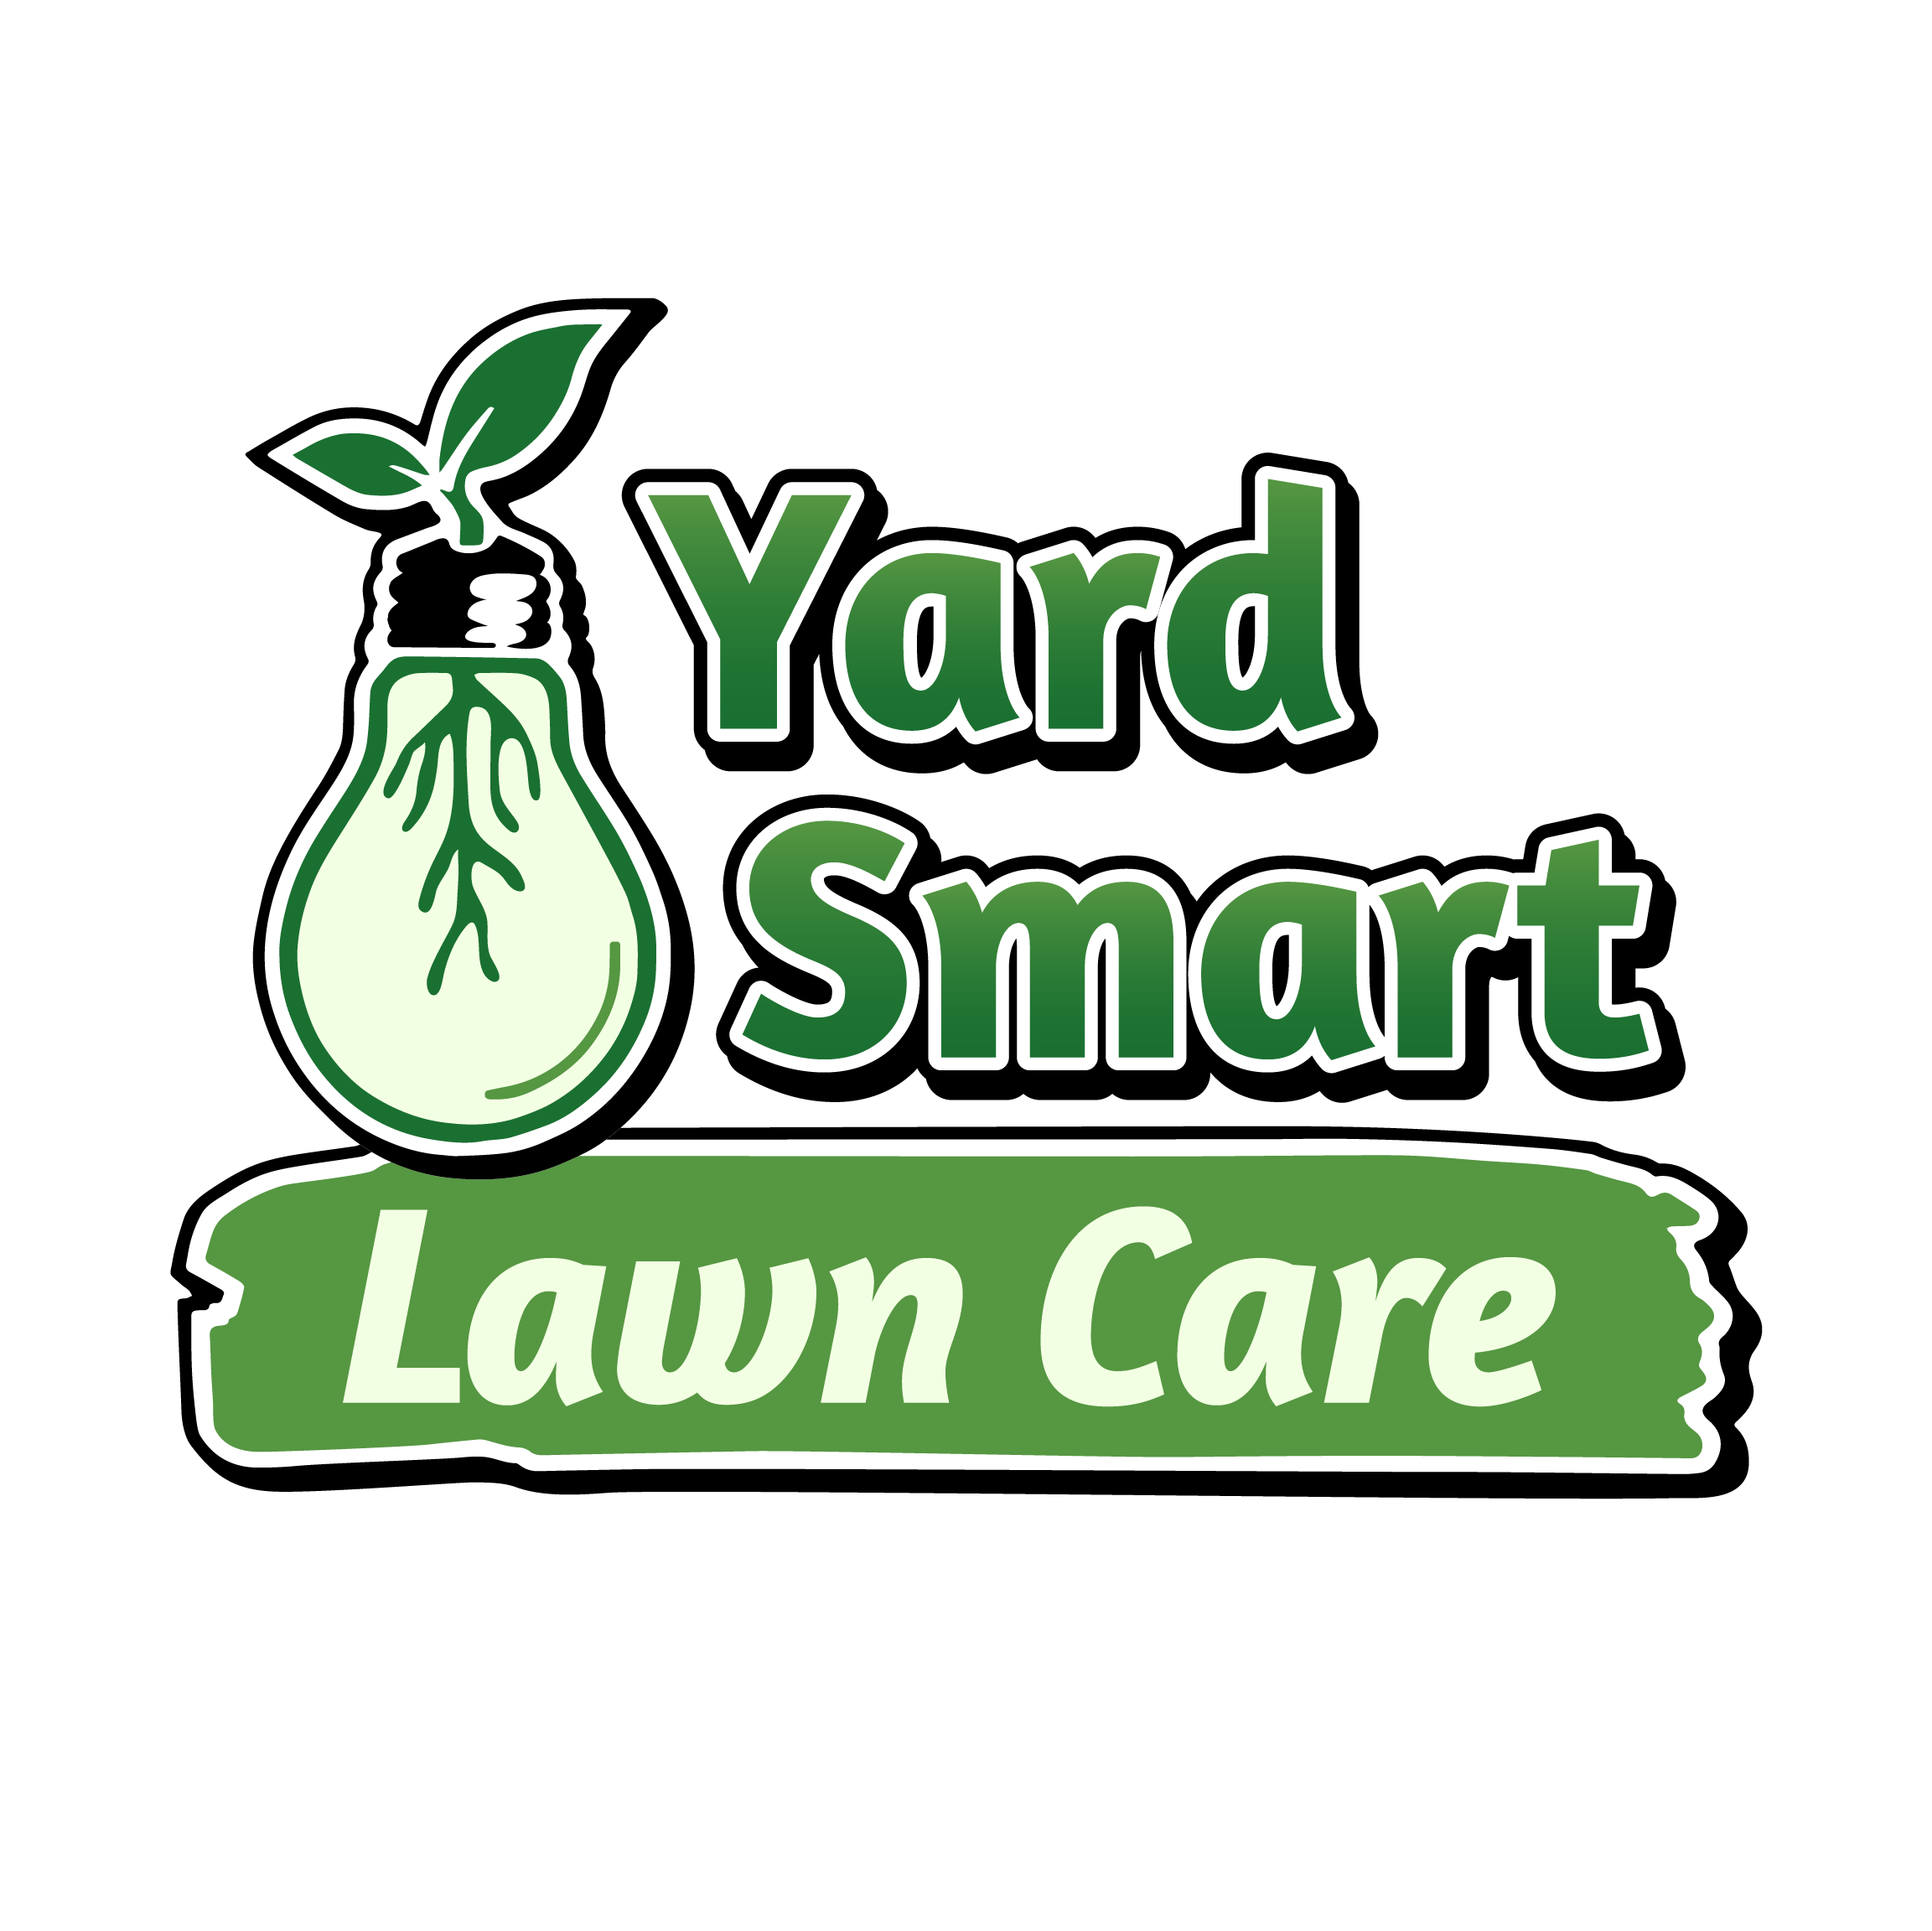 Yard smart lawn care logo